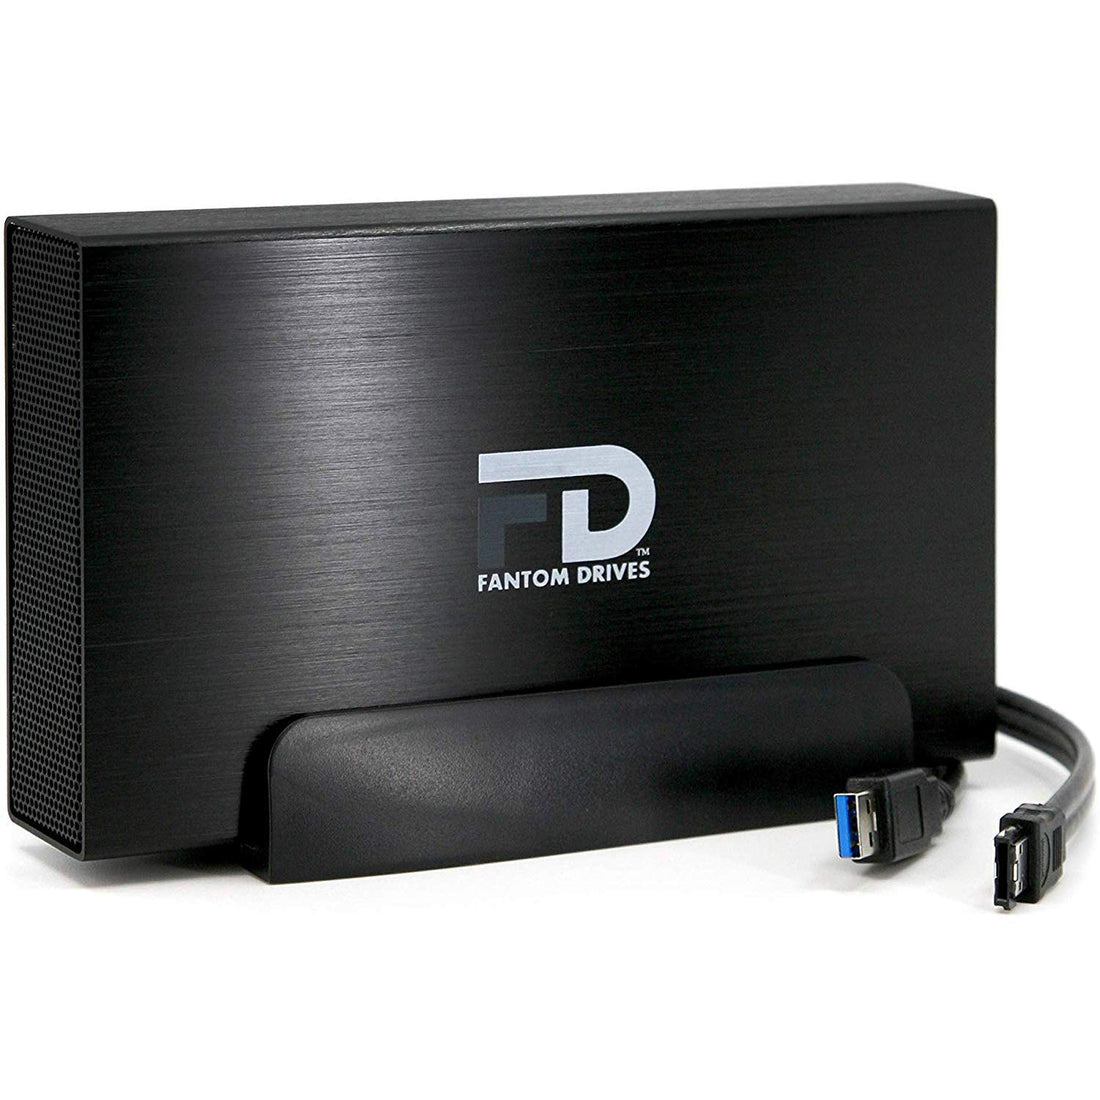 Fantom Drives 8TB DVR External Hard Drive Expander - USB 3.0 & eSATA - Supports Directv HR34, HR44, HR54, HS17 - Black Aluminum